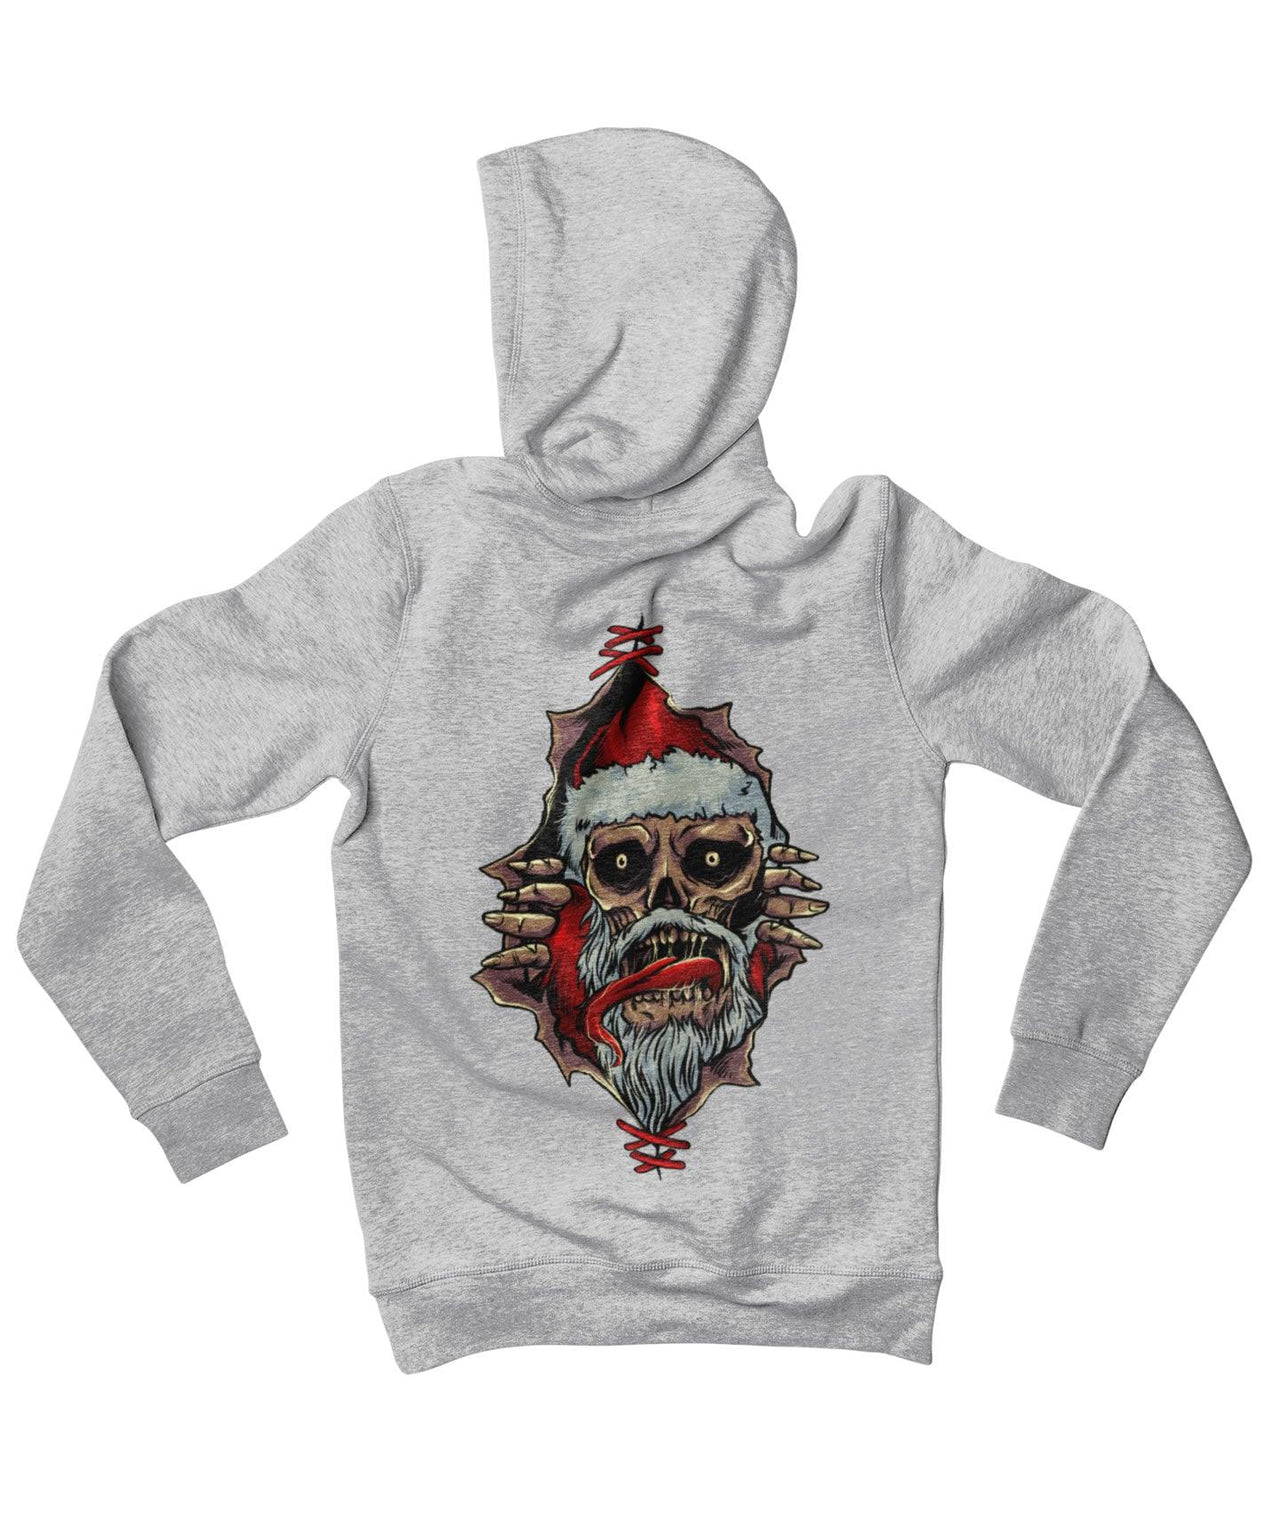 Skull Santa Peek-A-Boo Back Printed Christmas Graphic Hoodie 8Ball